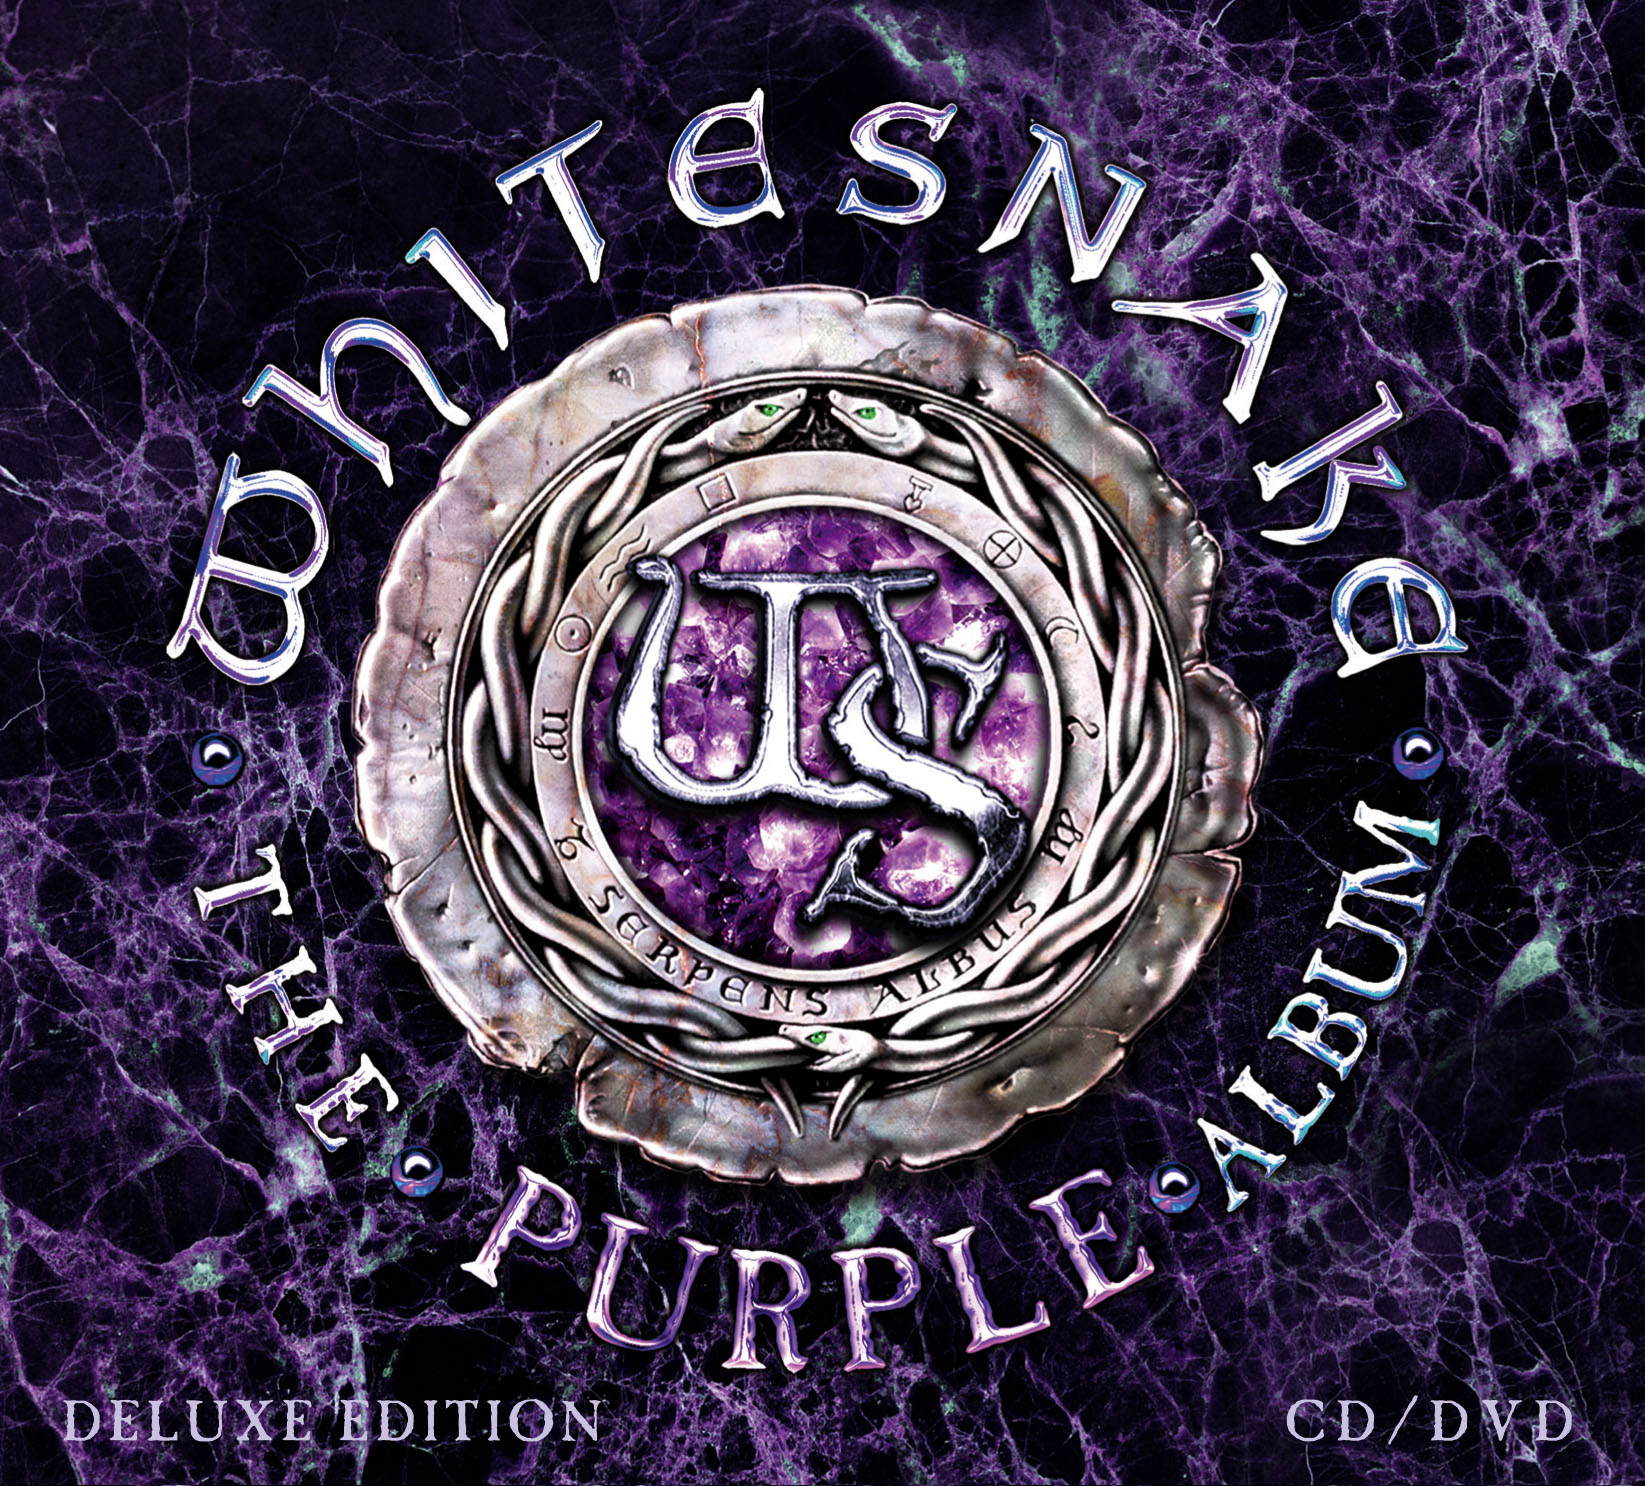 WHITESNAKE - The Purple Album (Deluxe Edition)